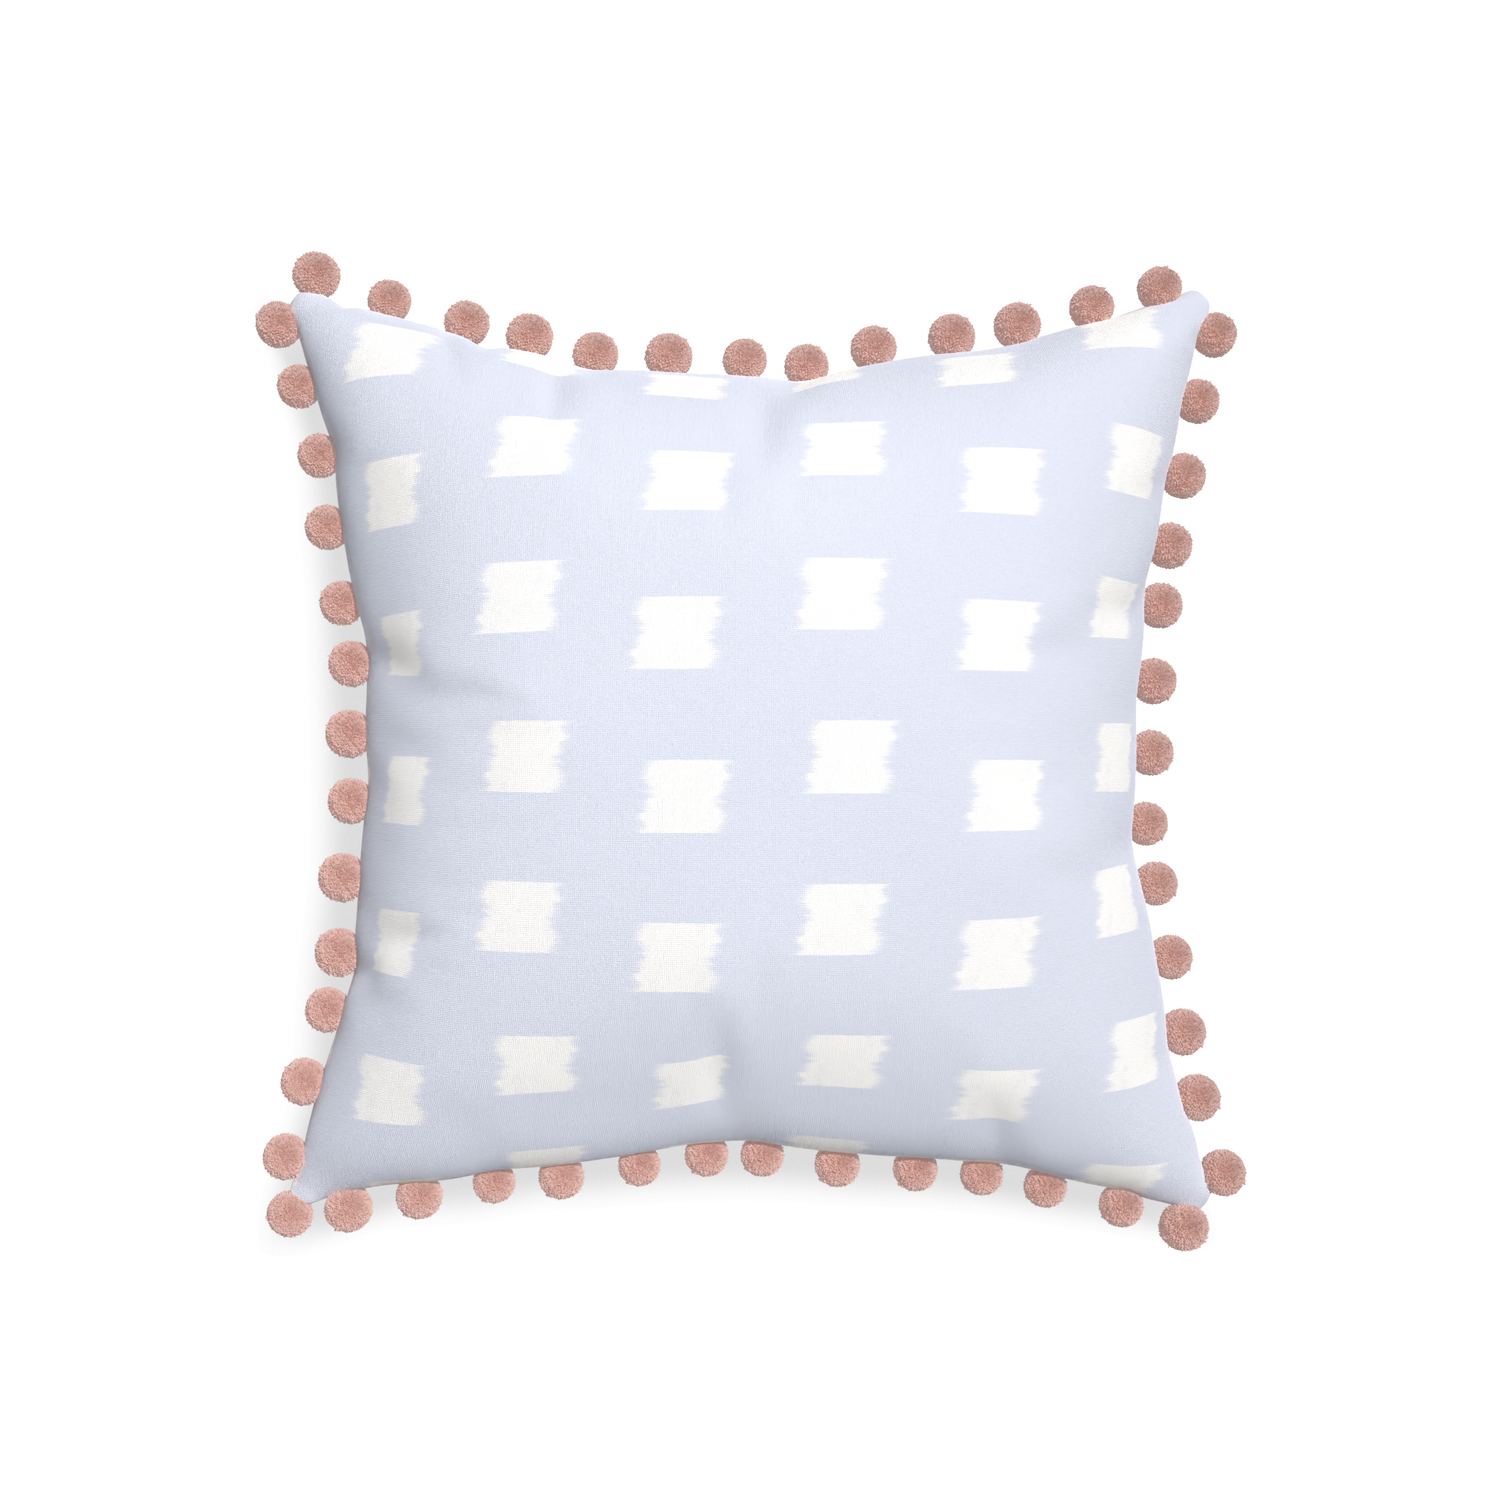 20-square denton custom sky blue patternpillow with rose pom pom on white background